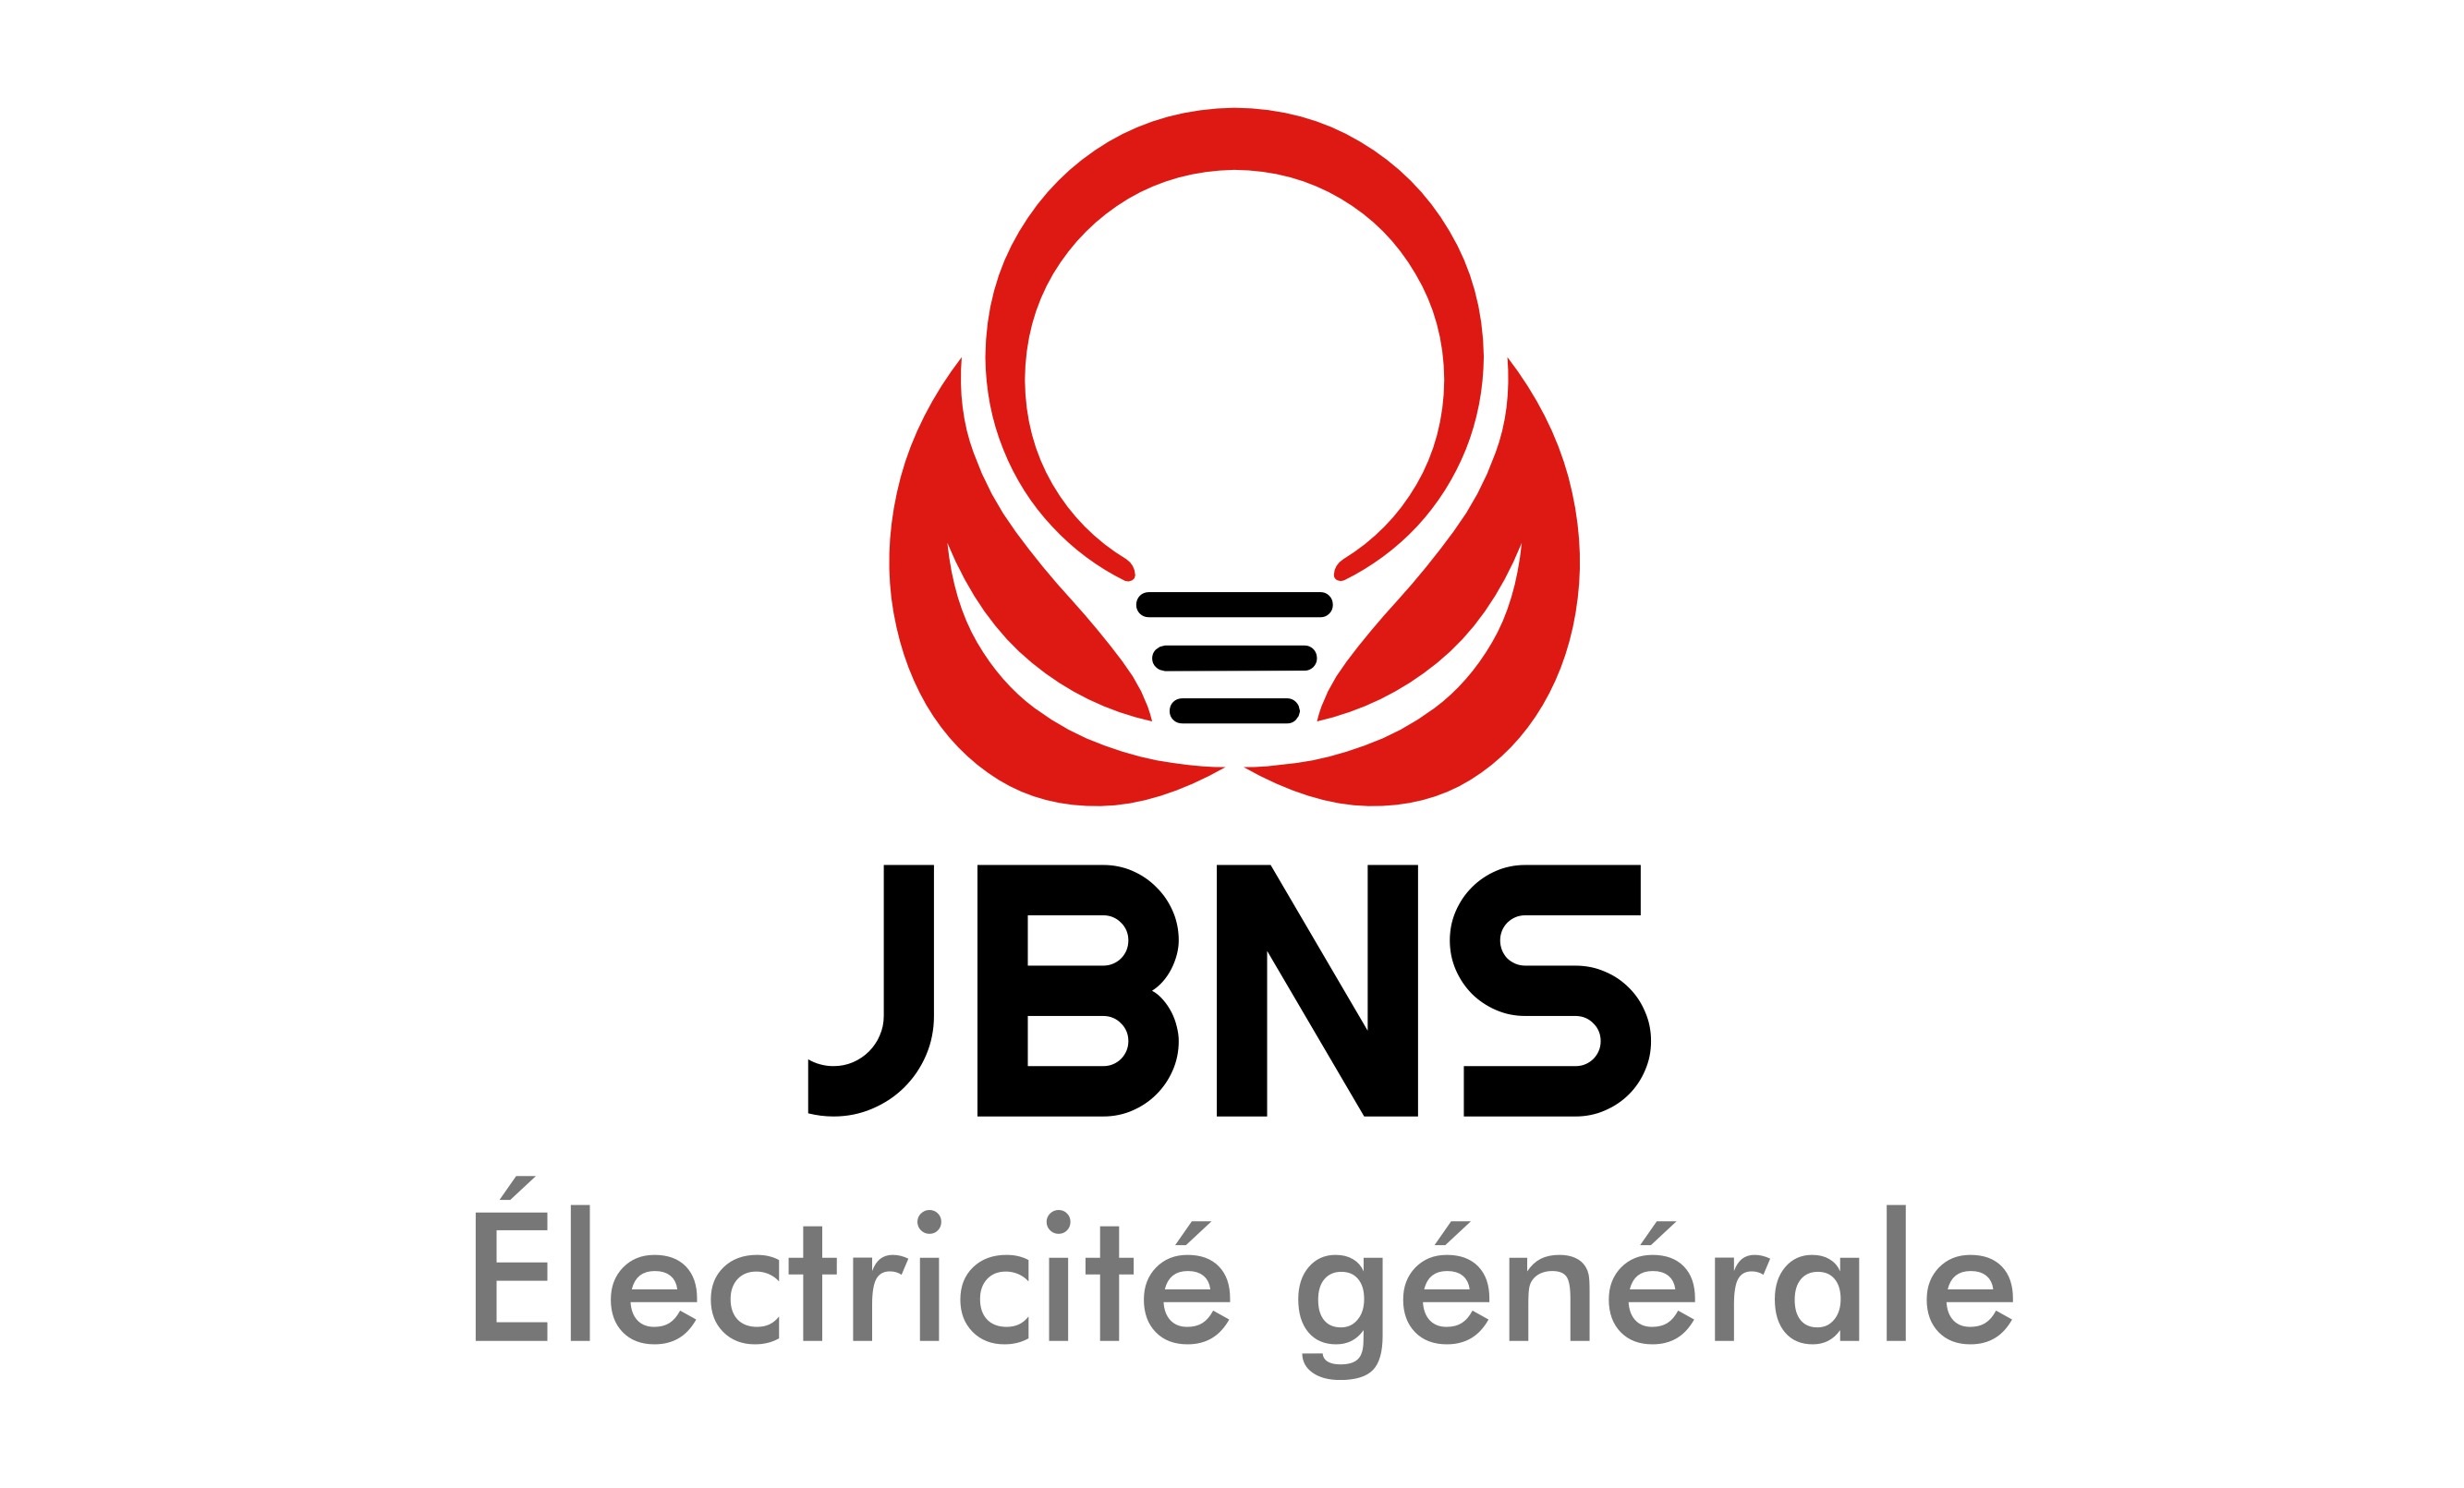 JBNS ELECTRICITE